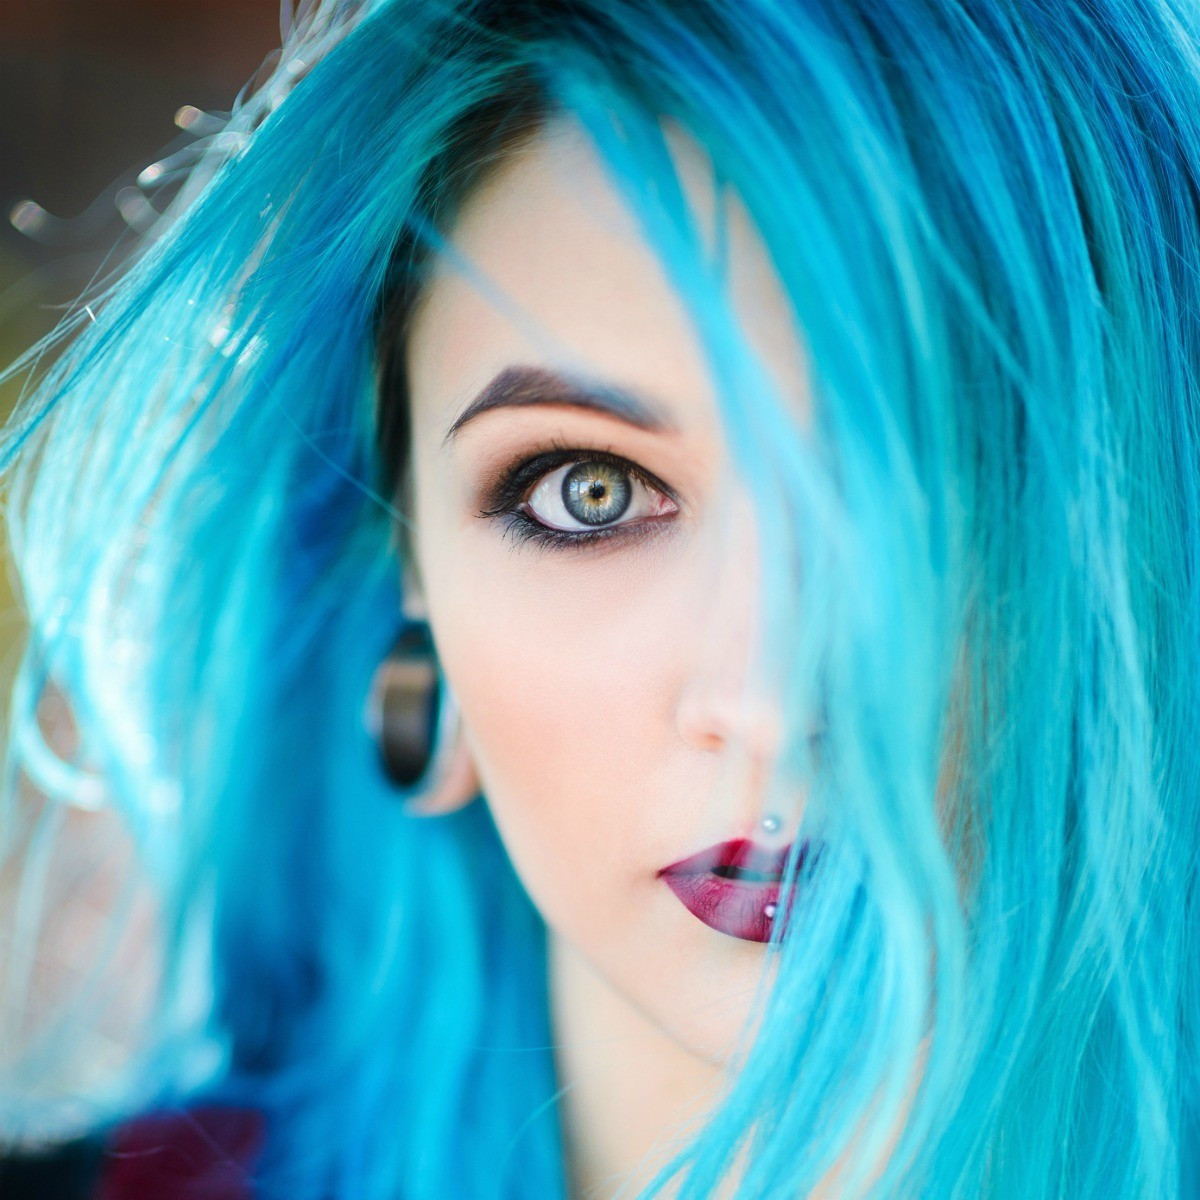 DIY Blue Hair Dye
 Adding Blue Hair Dye to Previously Dyed Hair